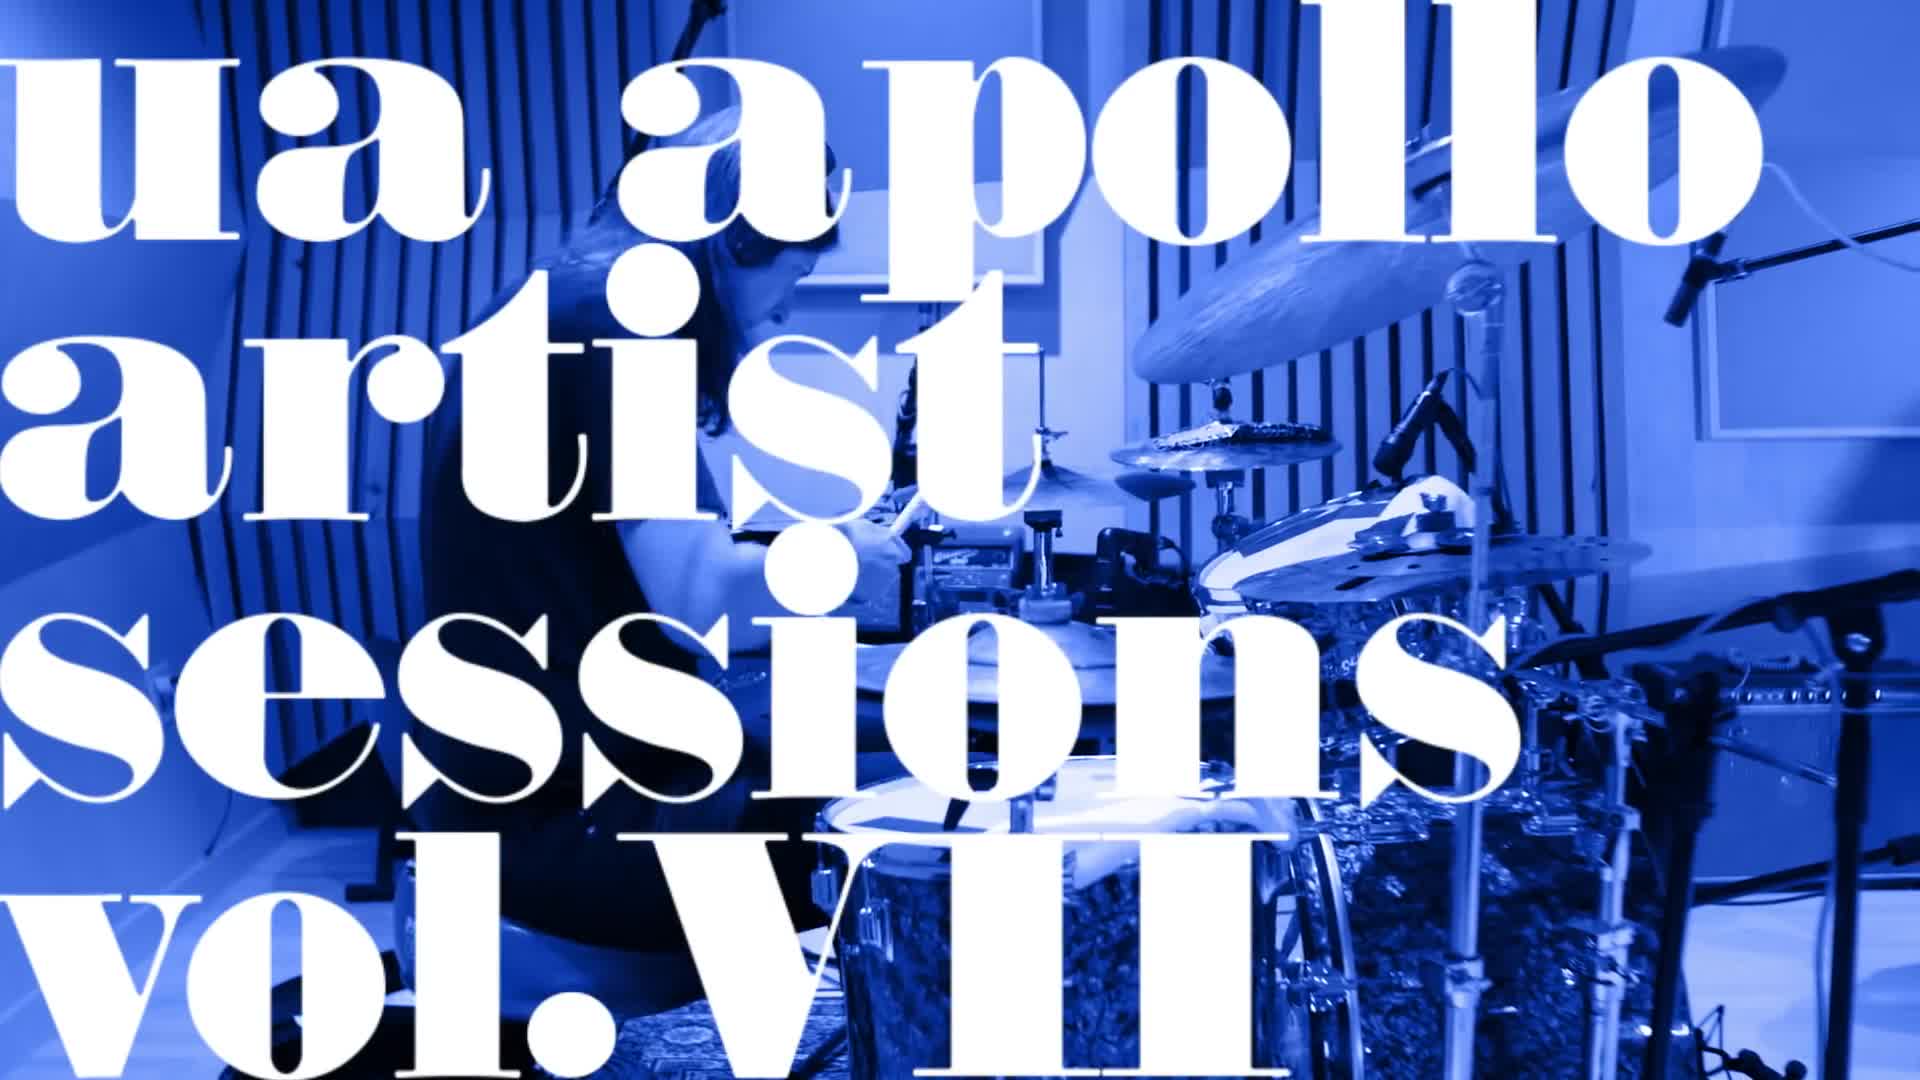 Universal Audio Apollo Artist Sessions Vol. VII - Mick Guzauski & Big Data - New Body